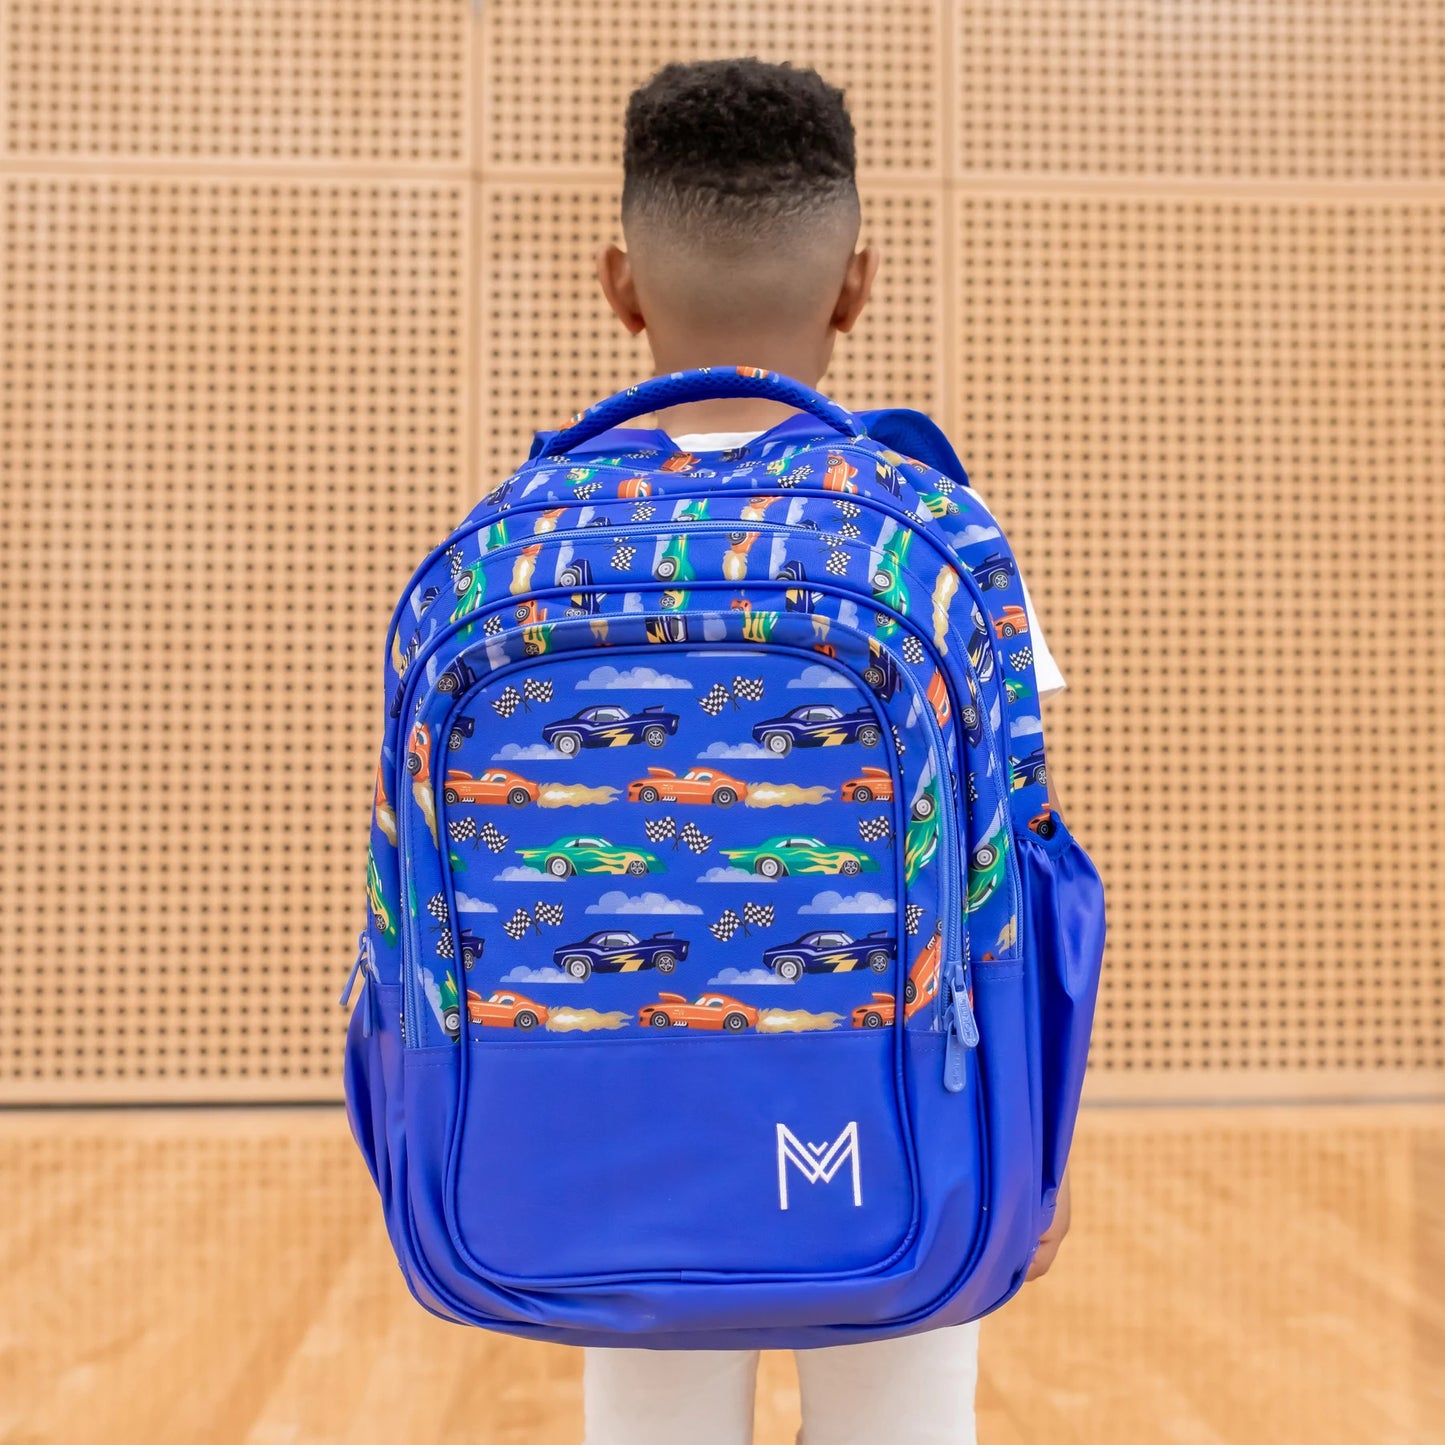 MontiiCo School Bag | Blue Speed Racer | For Kids & Teens